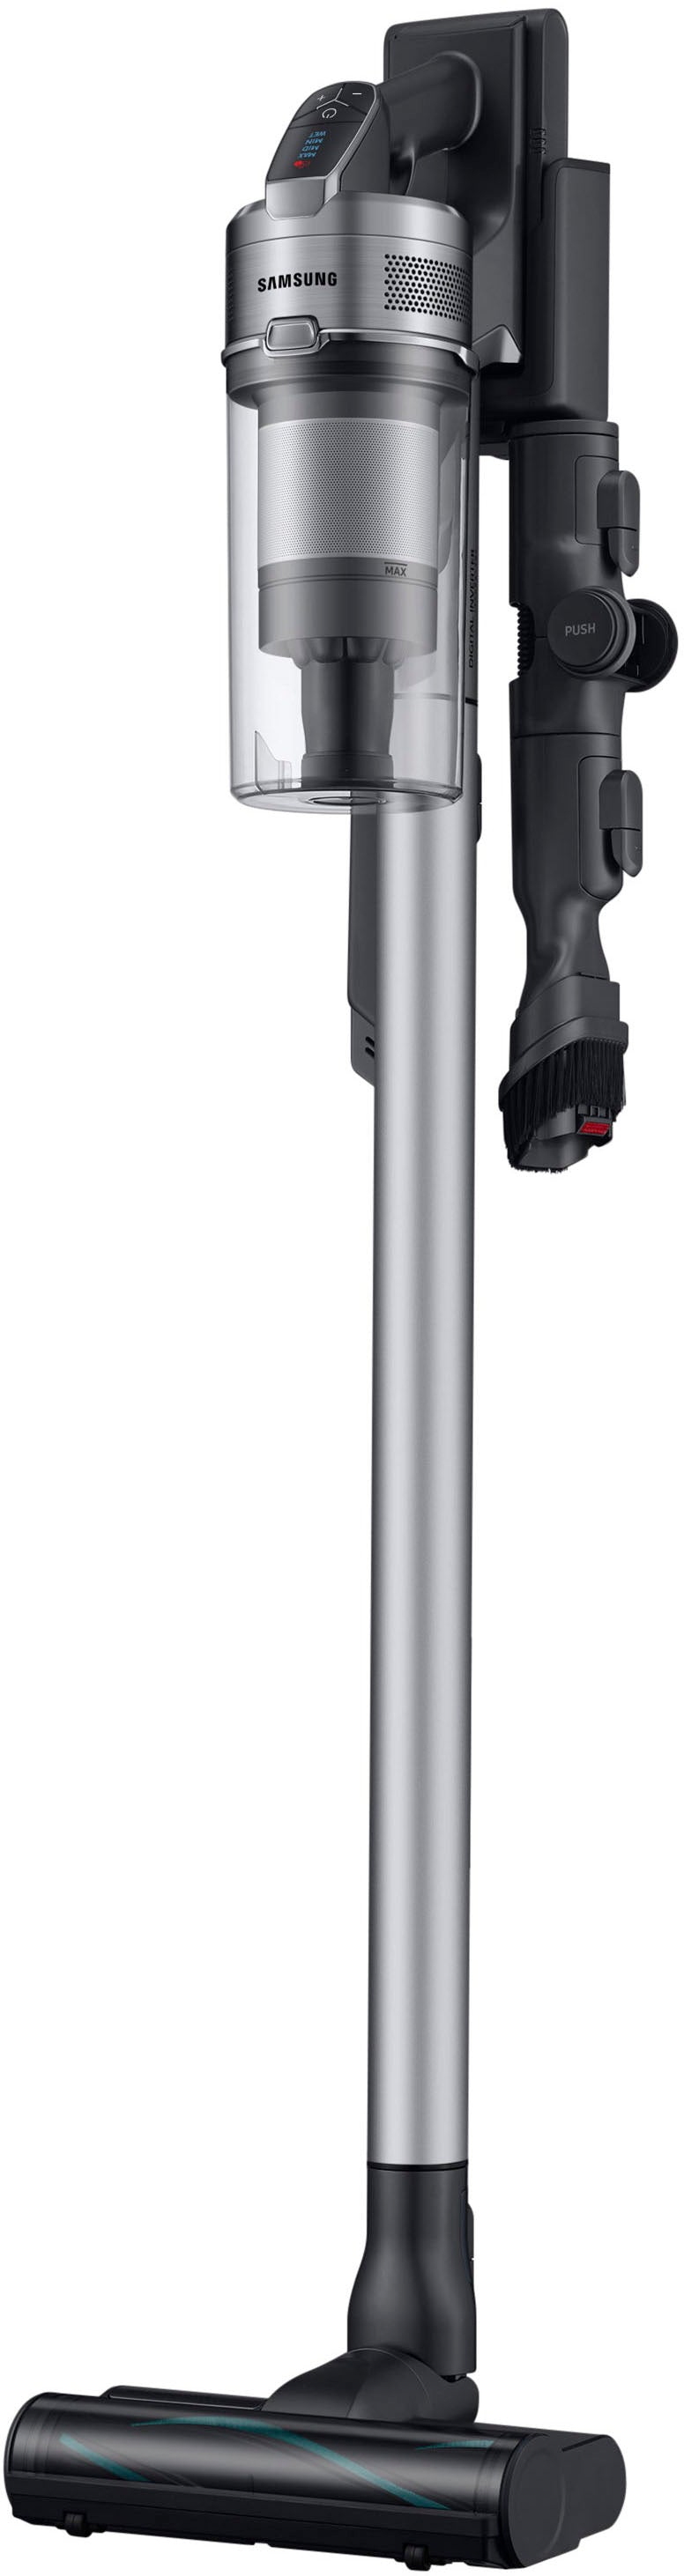 Samsung - Jet 75 Cordless Stick Vacuum - Titan ChroMetal_0